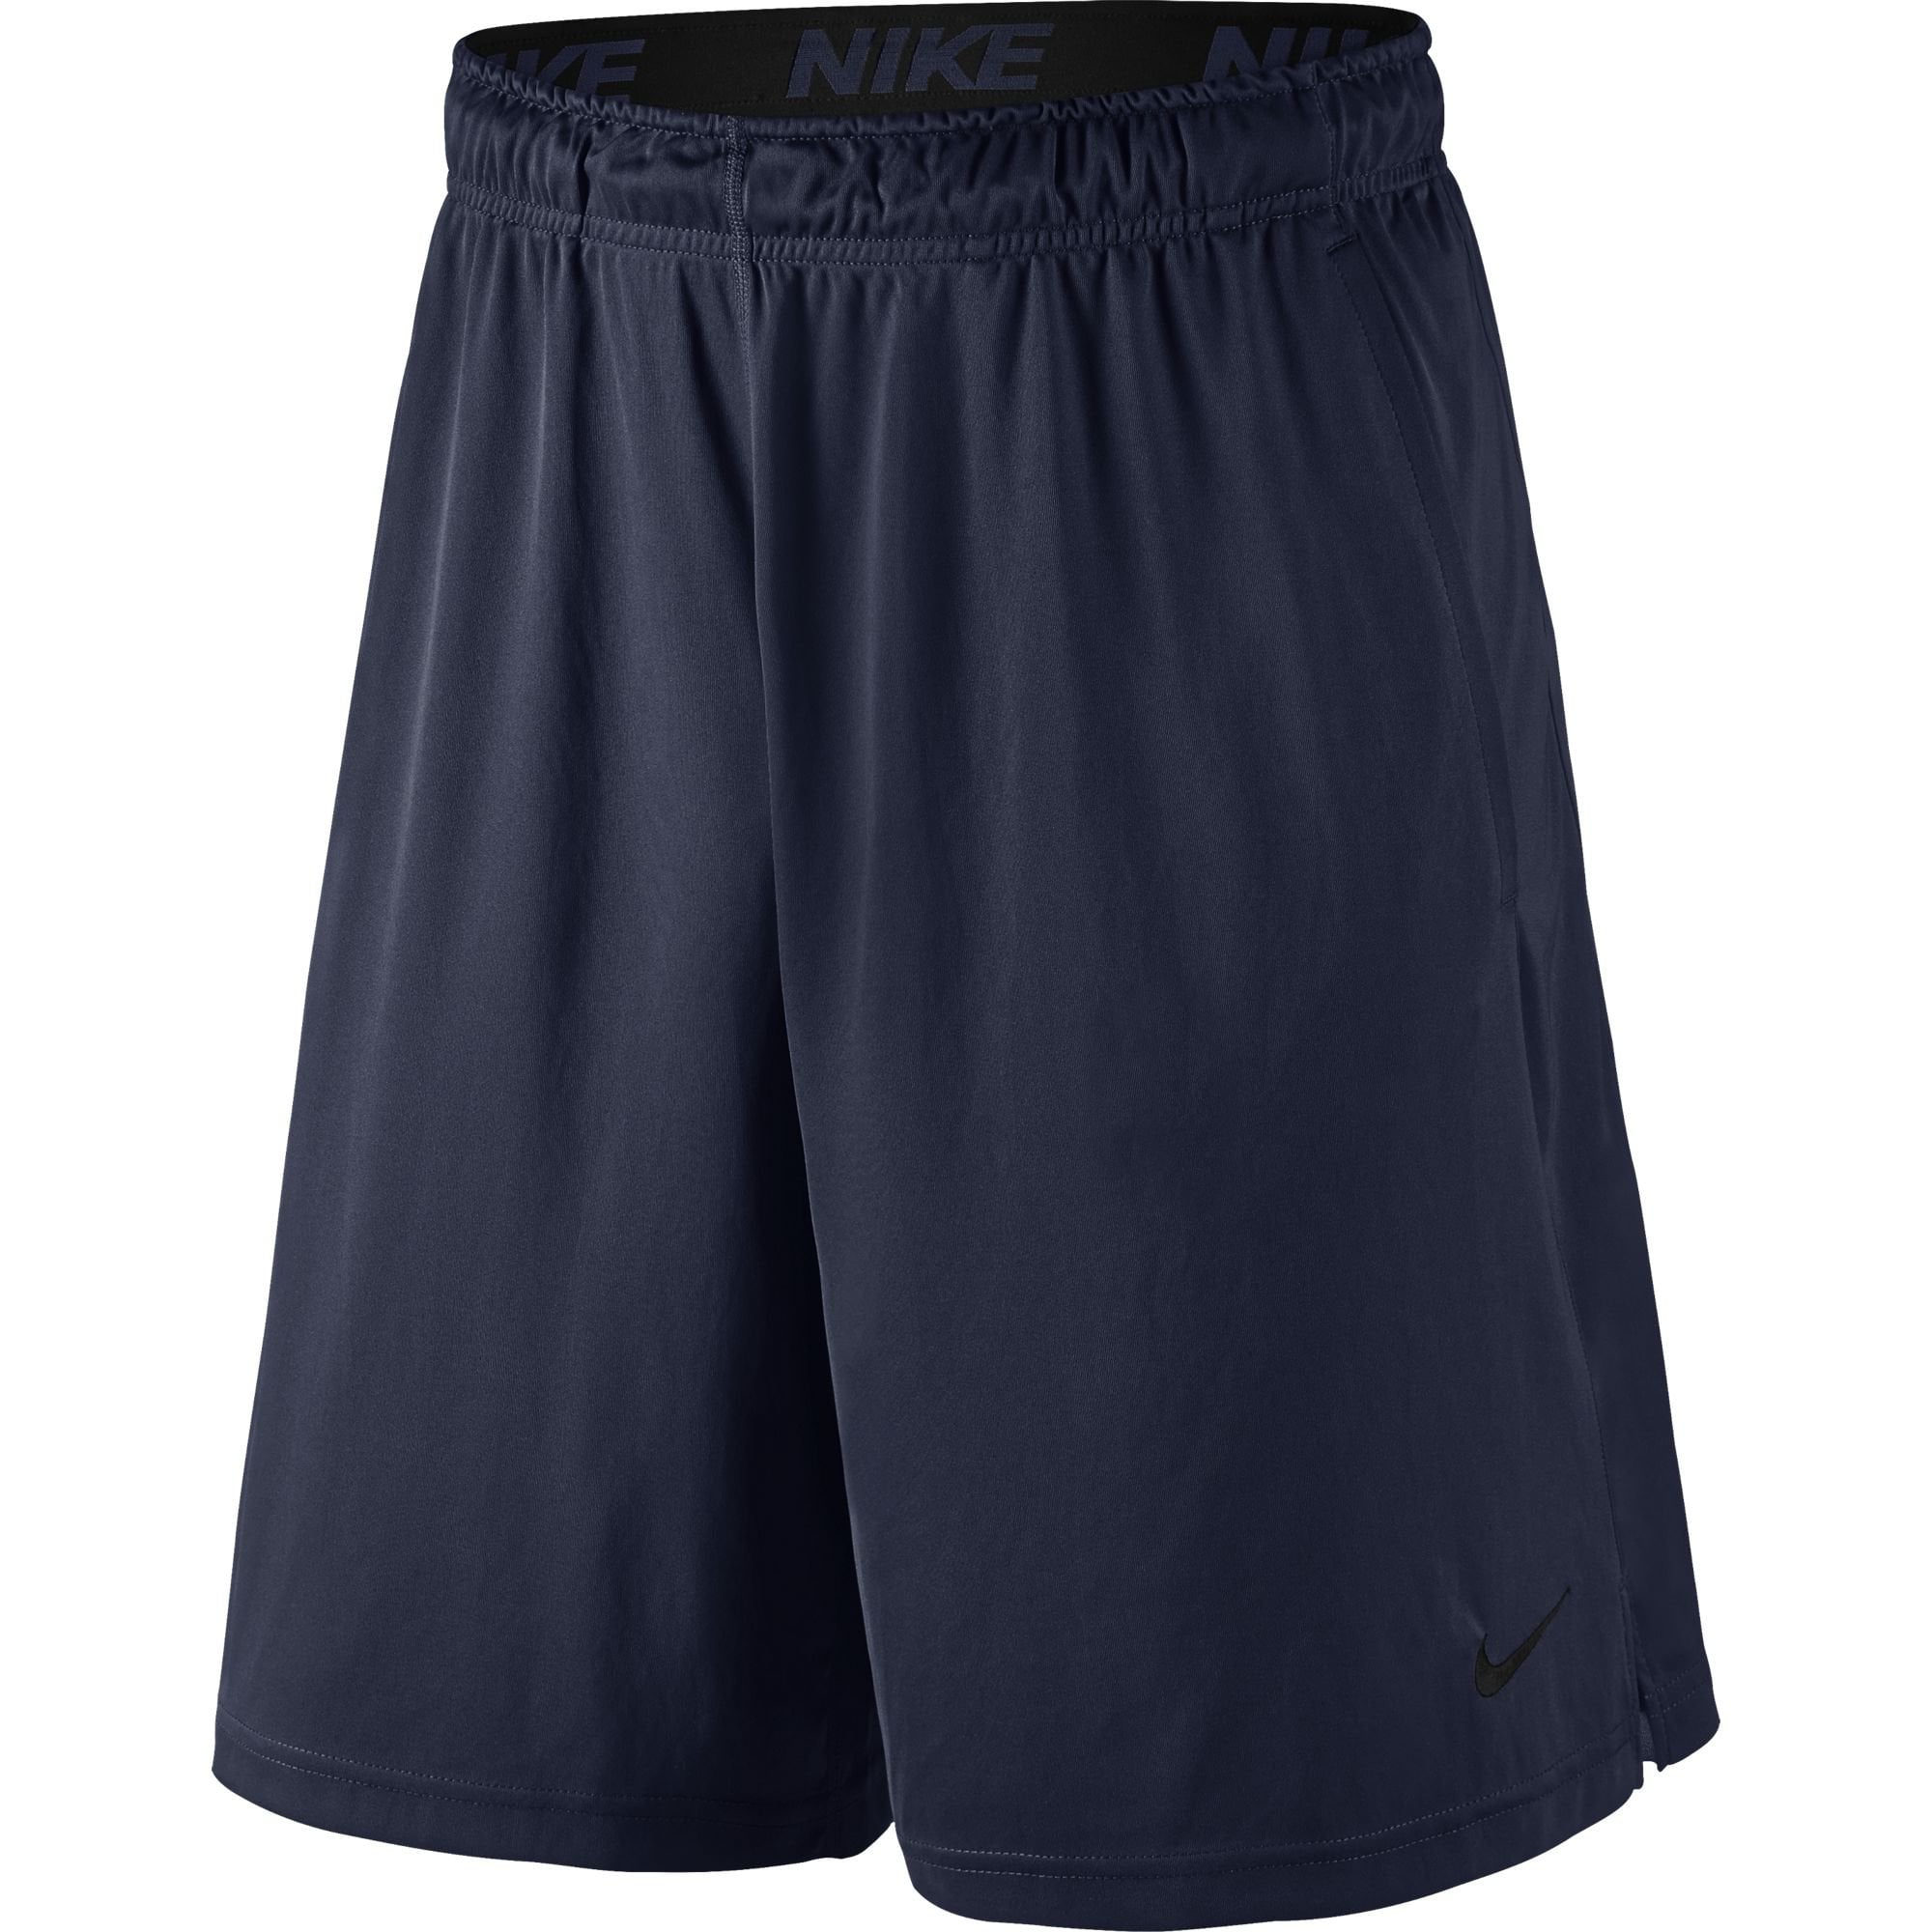 Nike Men's 9'' Fly Shorts - Obsidian/Black - Size M - Walmart.com